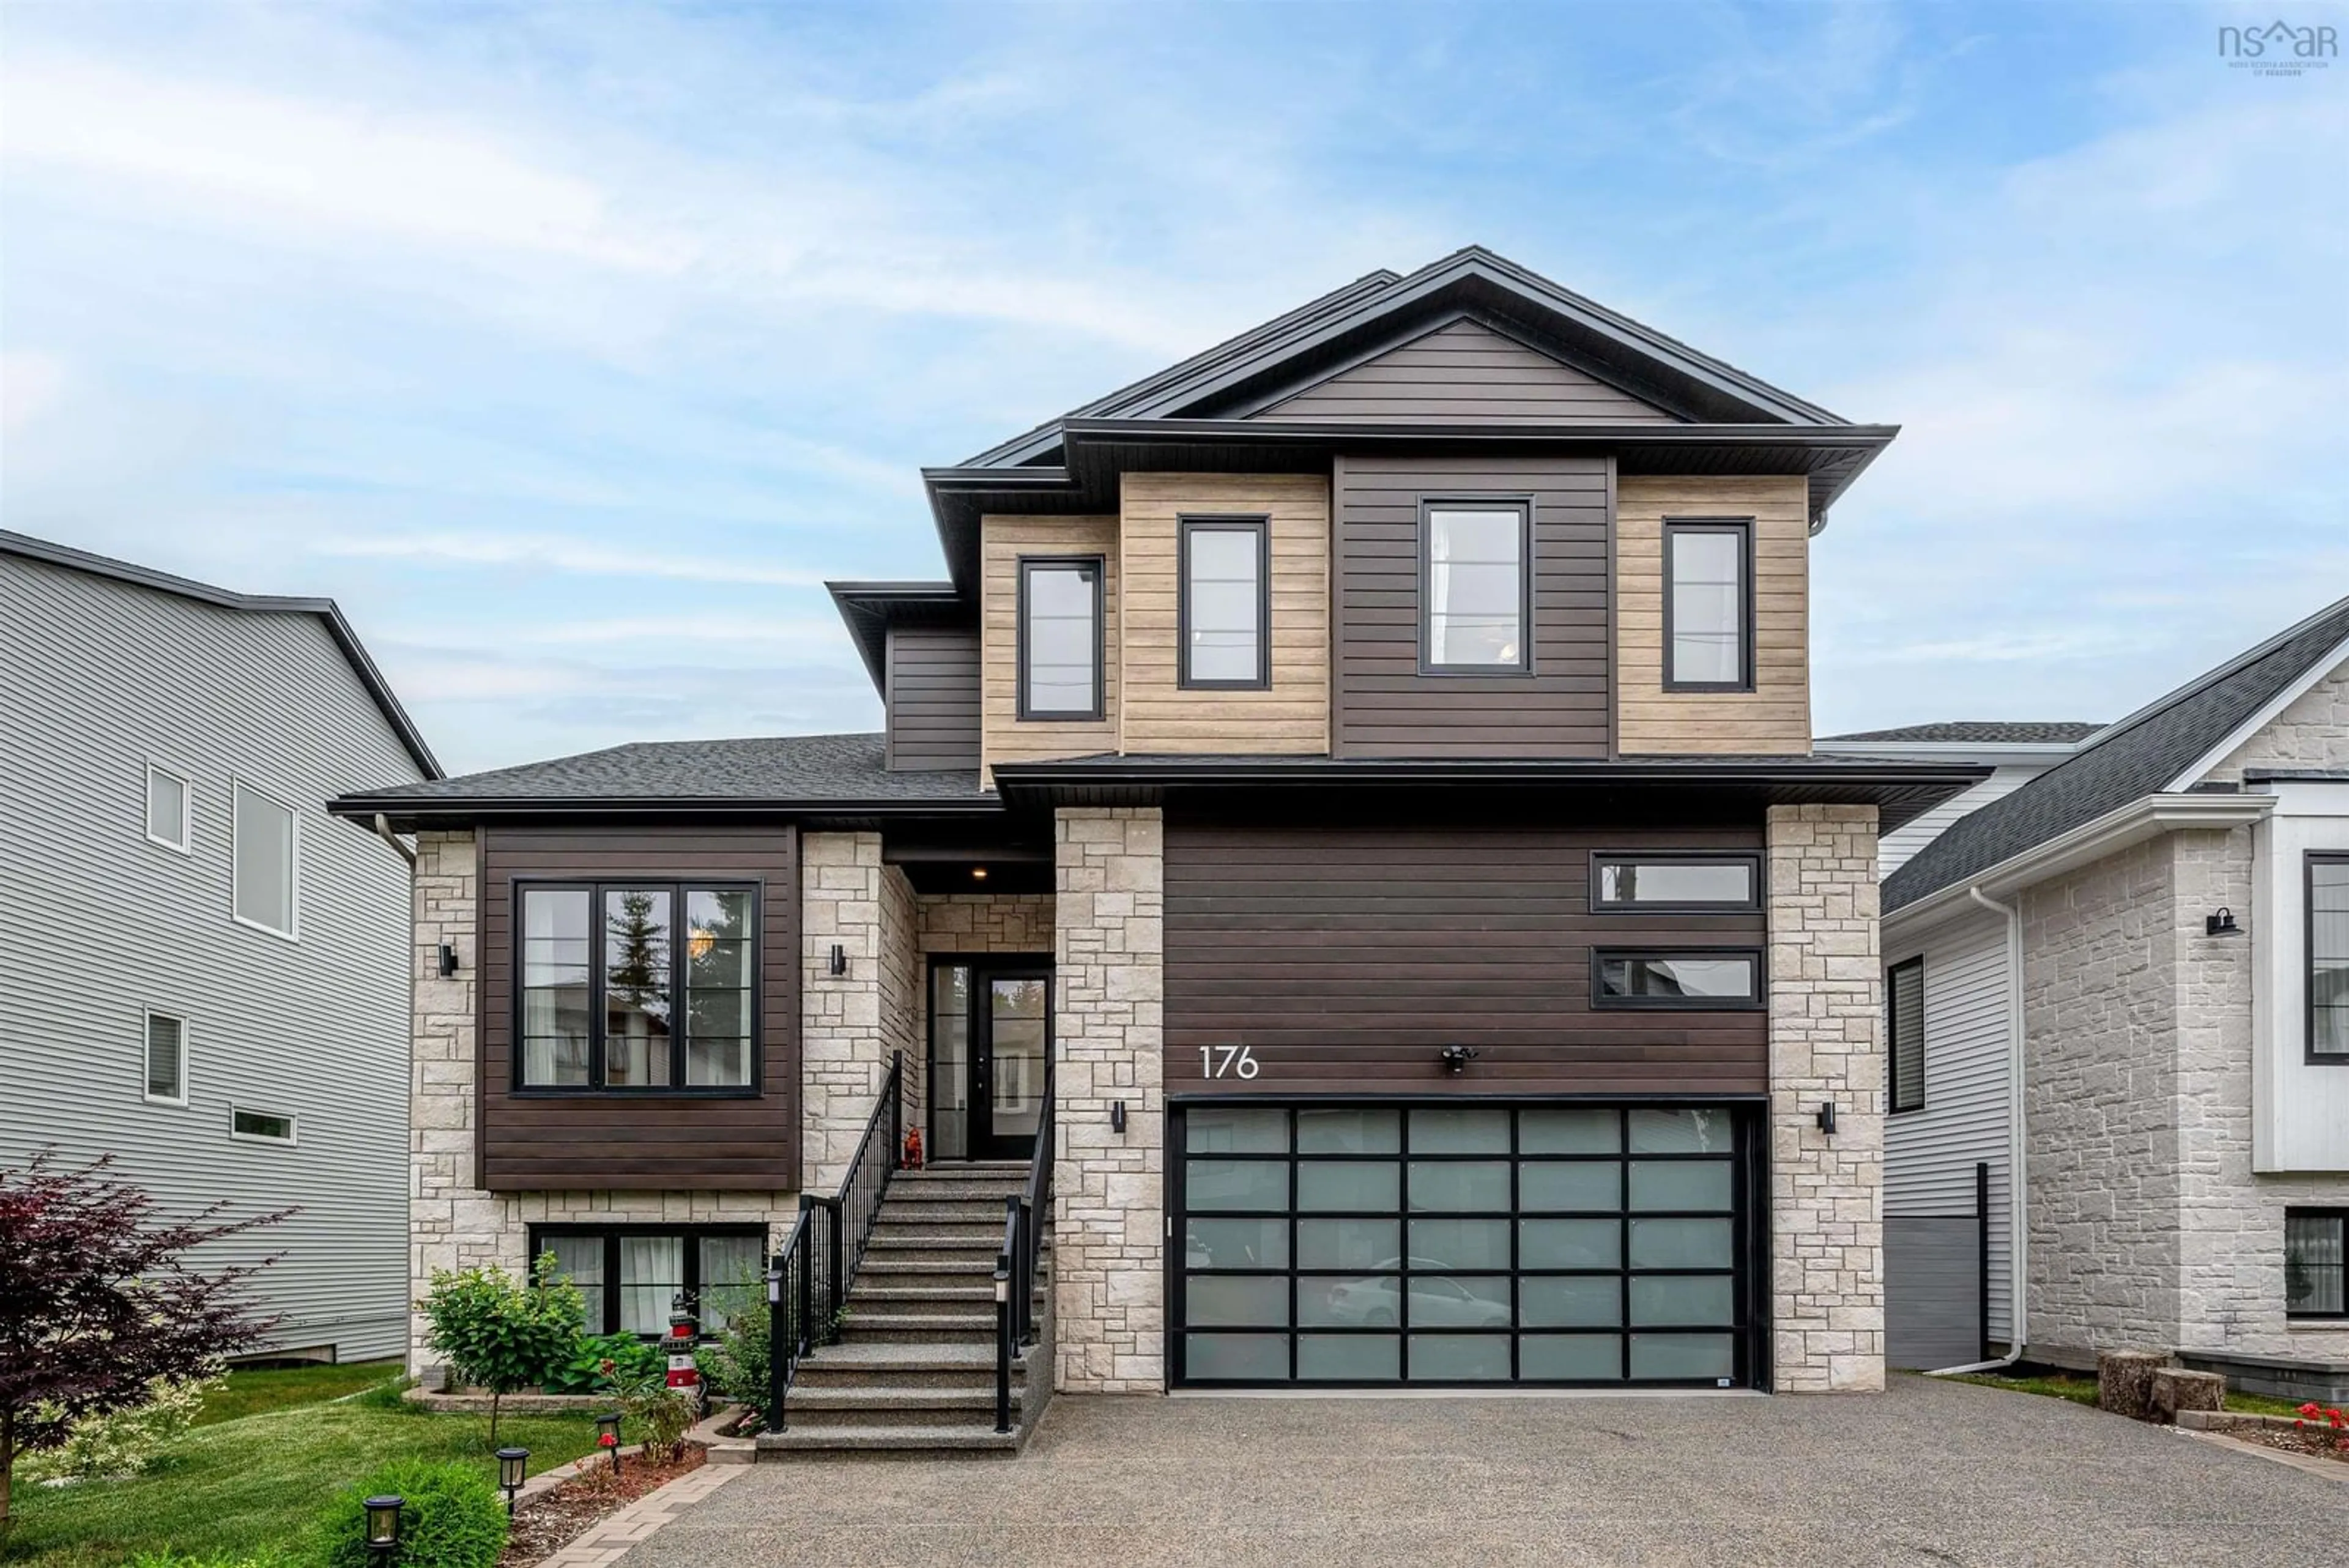 Home with brick exterior material for 176 Talus Ave, Halifax Nova Scotia B4B 2G3